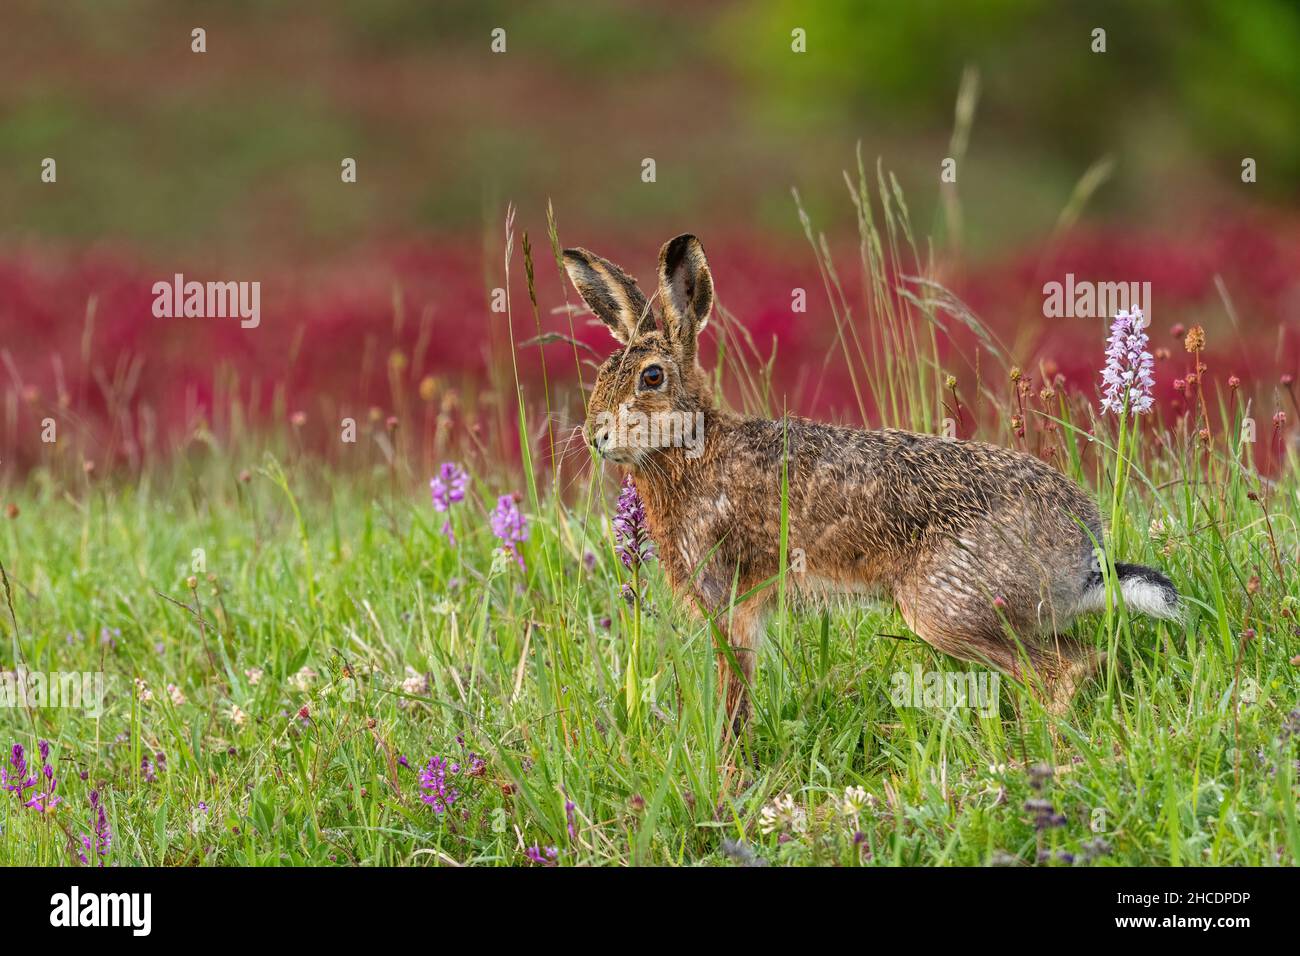 European Hare - Lepus europaeus, common hare from European grasslands, meadows and fields, Czech Republic. Stock Photo